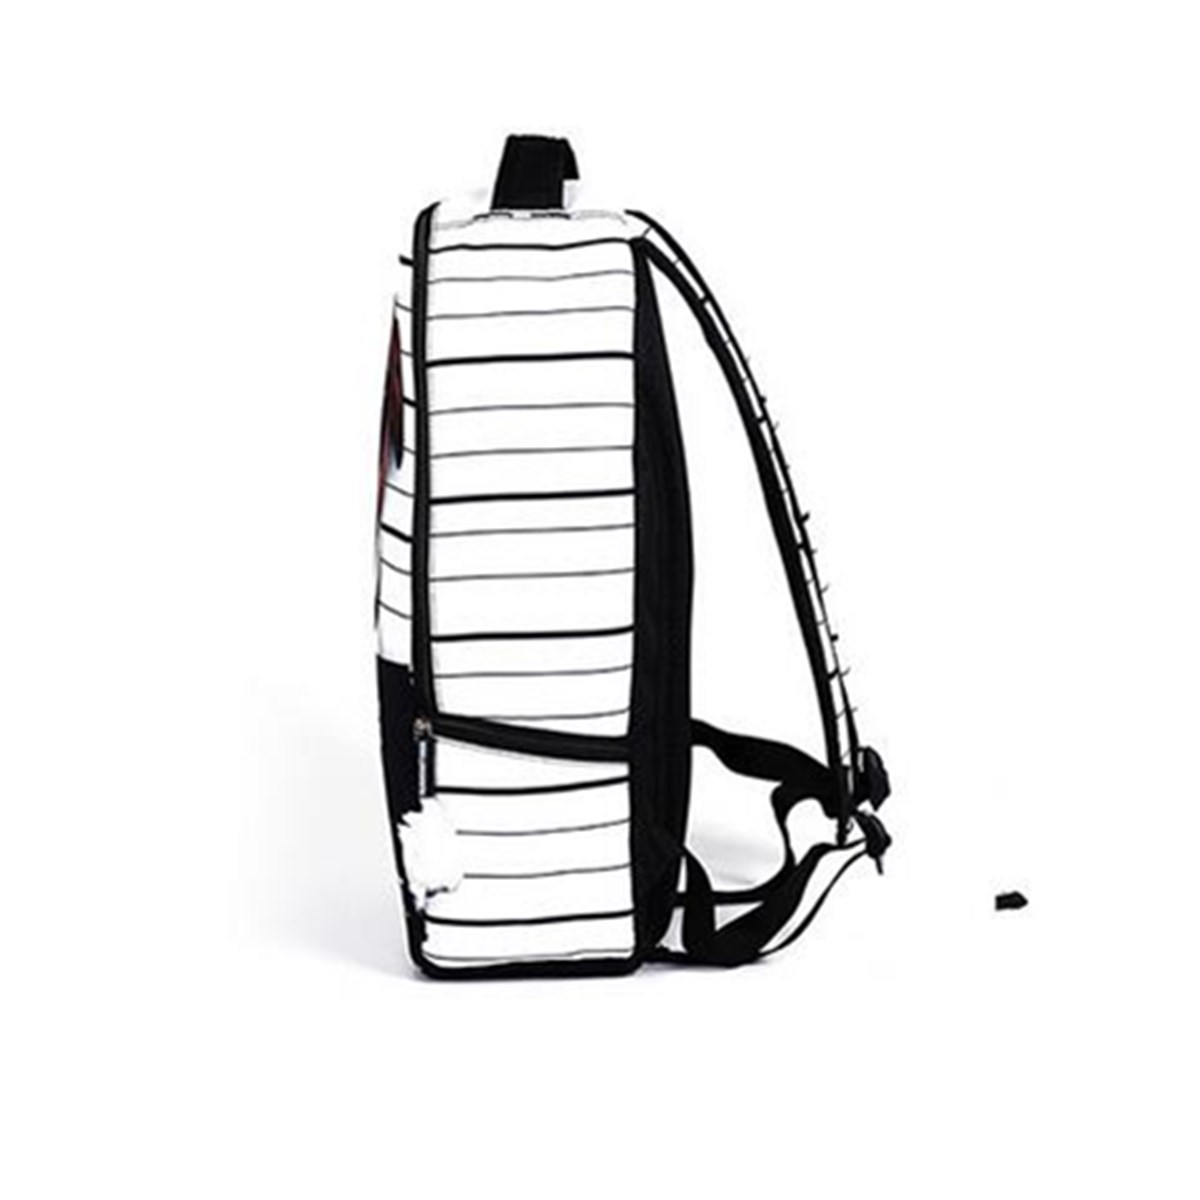 IPReereg-Polyester-Cartoon-Laptop-Backpack-Cute-Animal-Dog-Cat-Print-Schoolbag-Rucksack-1198560-6